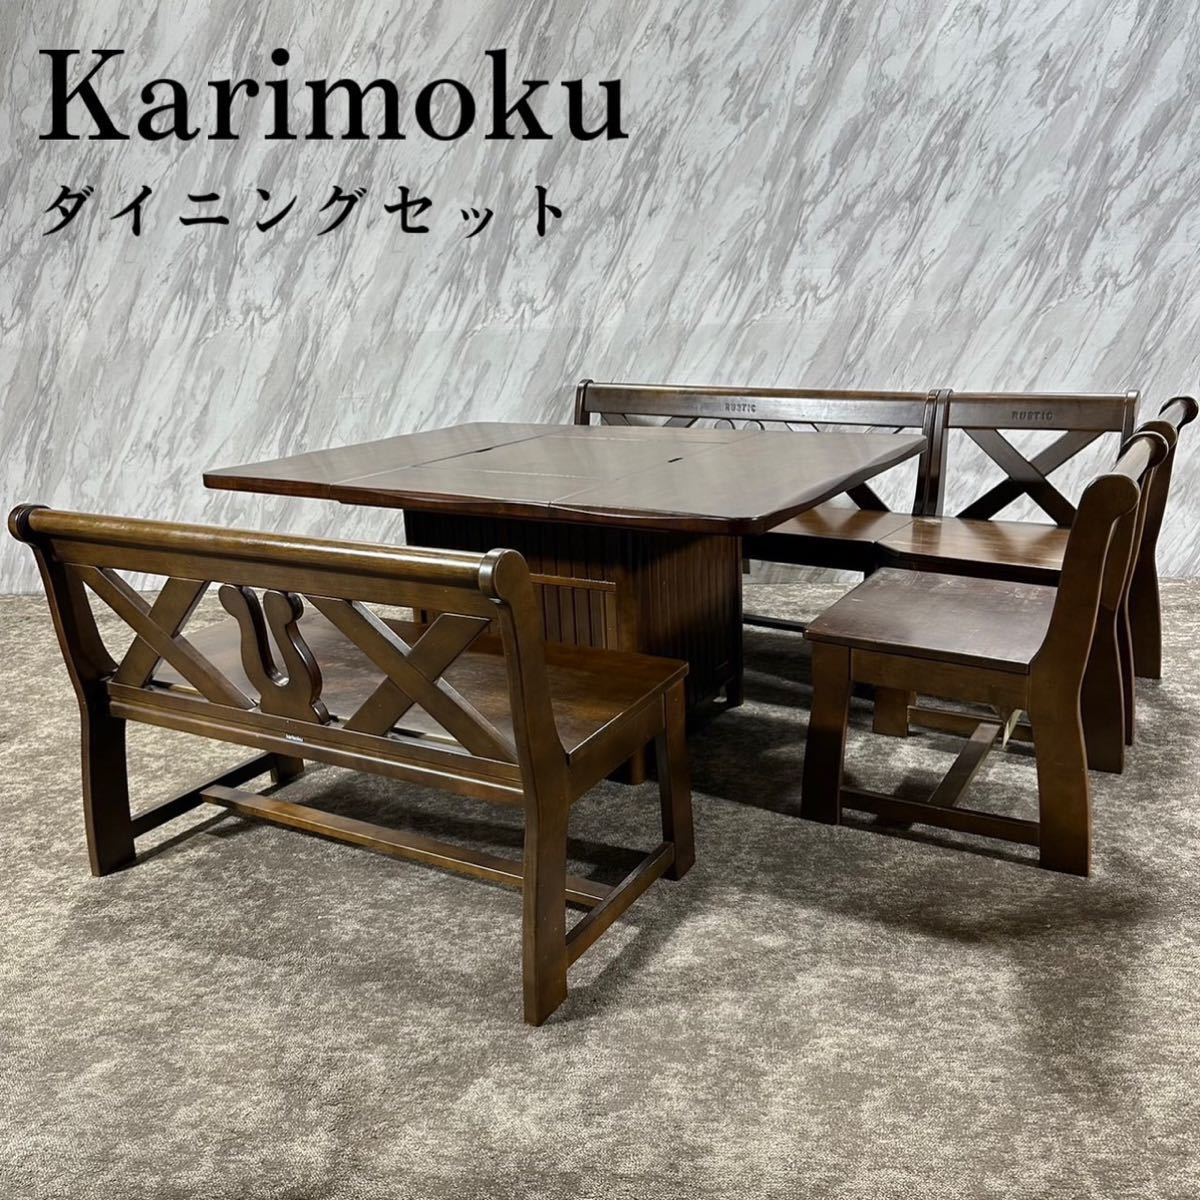 Karimoku Rustic ダイニングセット テーブル チェア I089